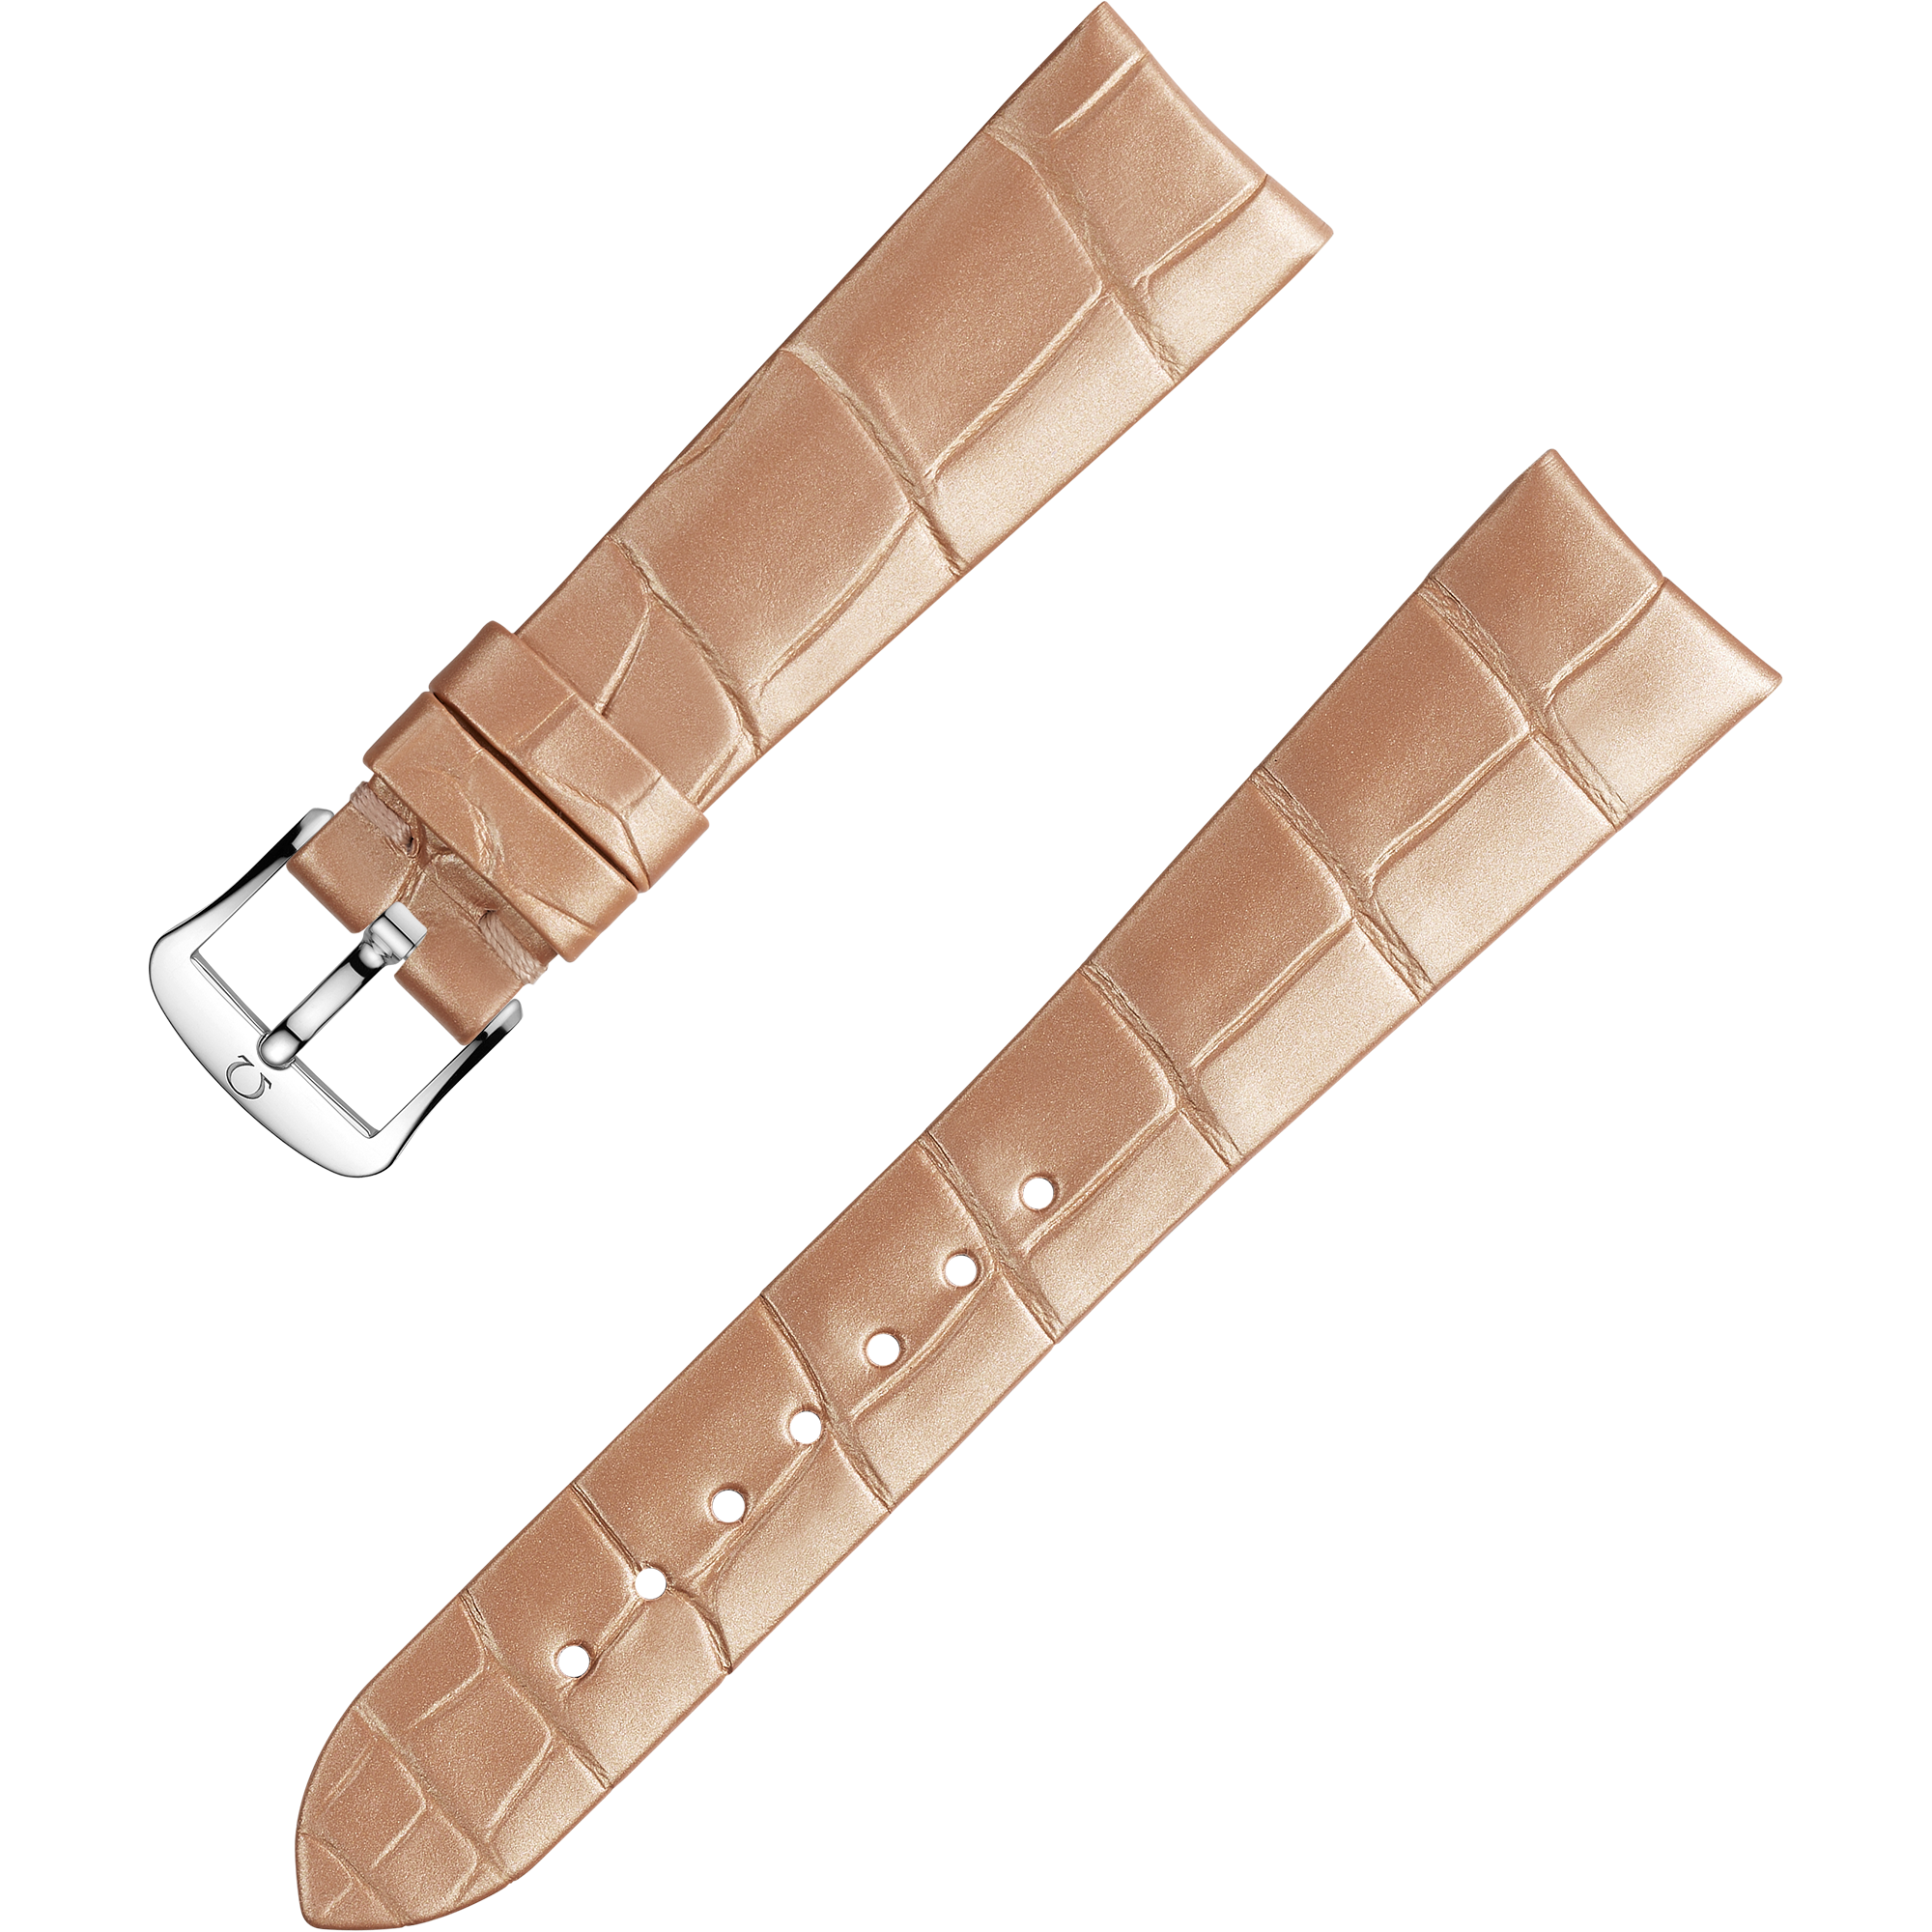 Two-piece strap - Shiny beige alligator leather strap with pin buckle - 032CUZ013034W